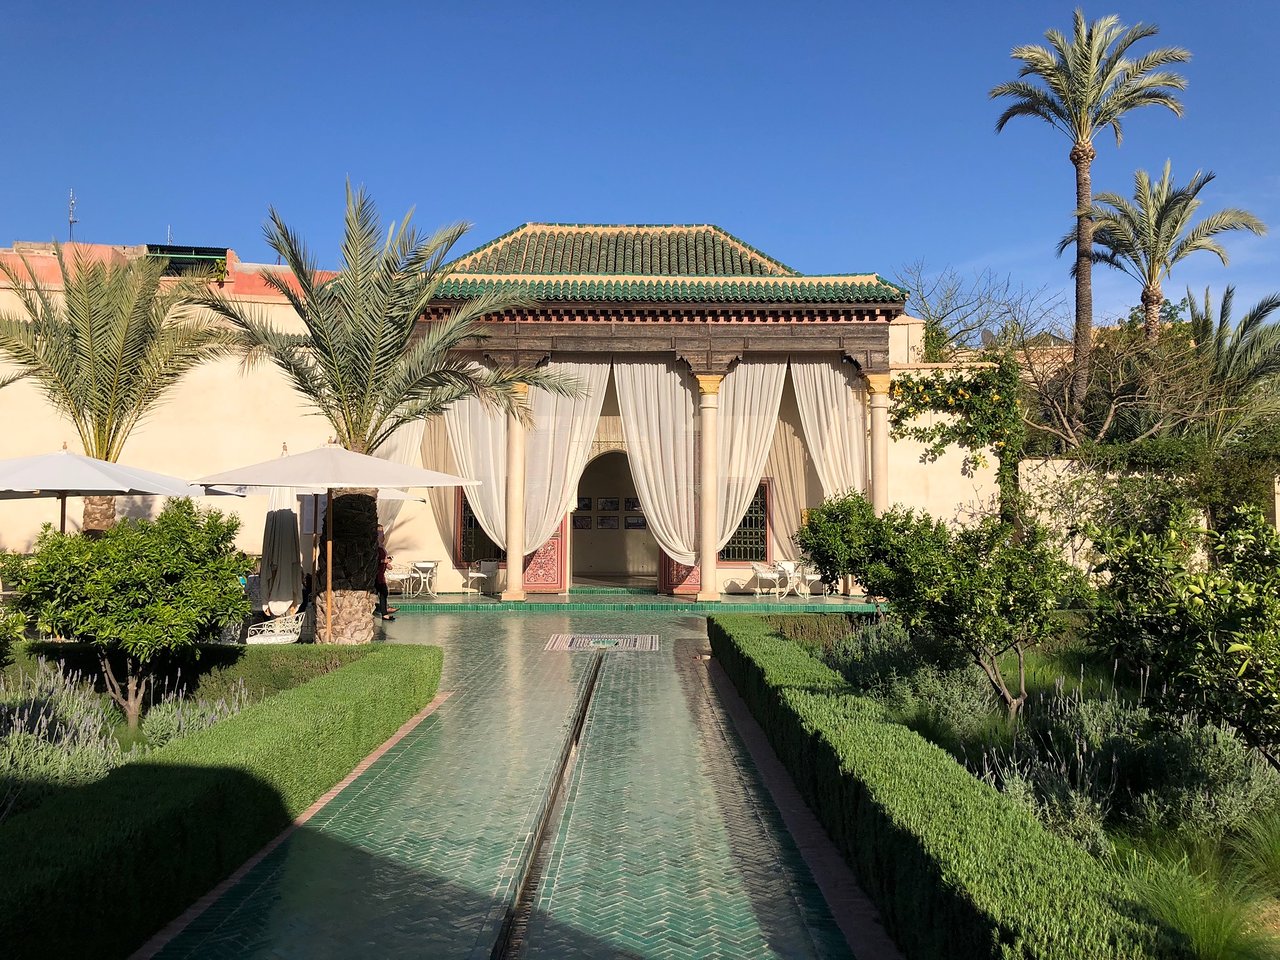 Le Jardin Marrakech Luxe Le Jardin Secret Marrakech 2020 All You Need to Know